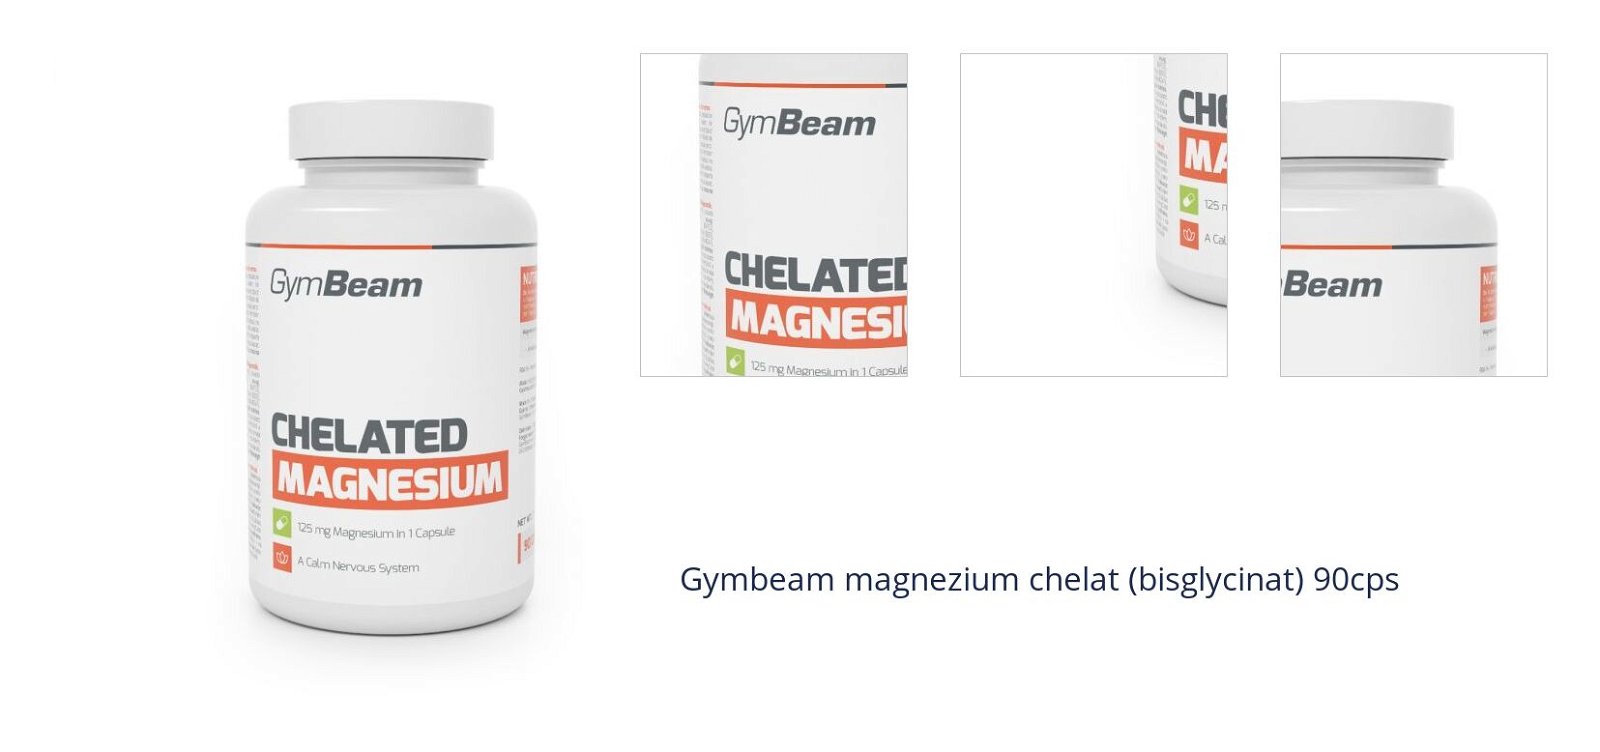 Gymbeam magnezium chelat (bisglycinat) 90cps 1